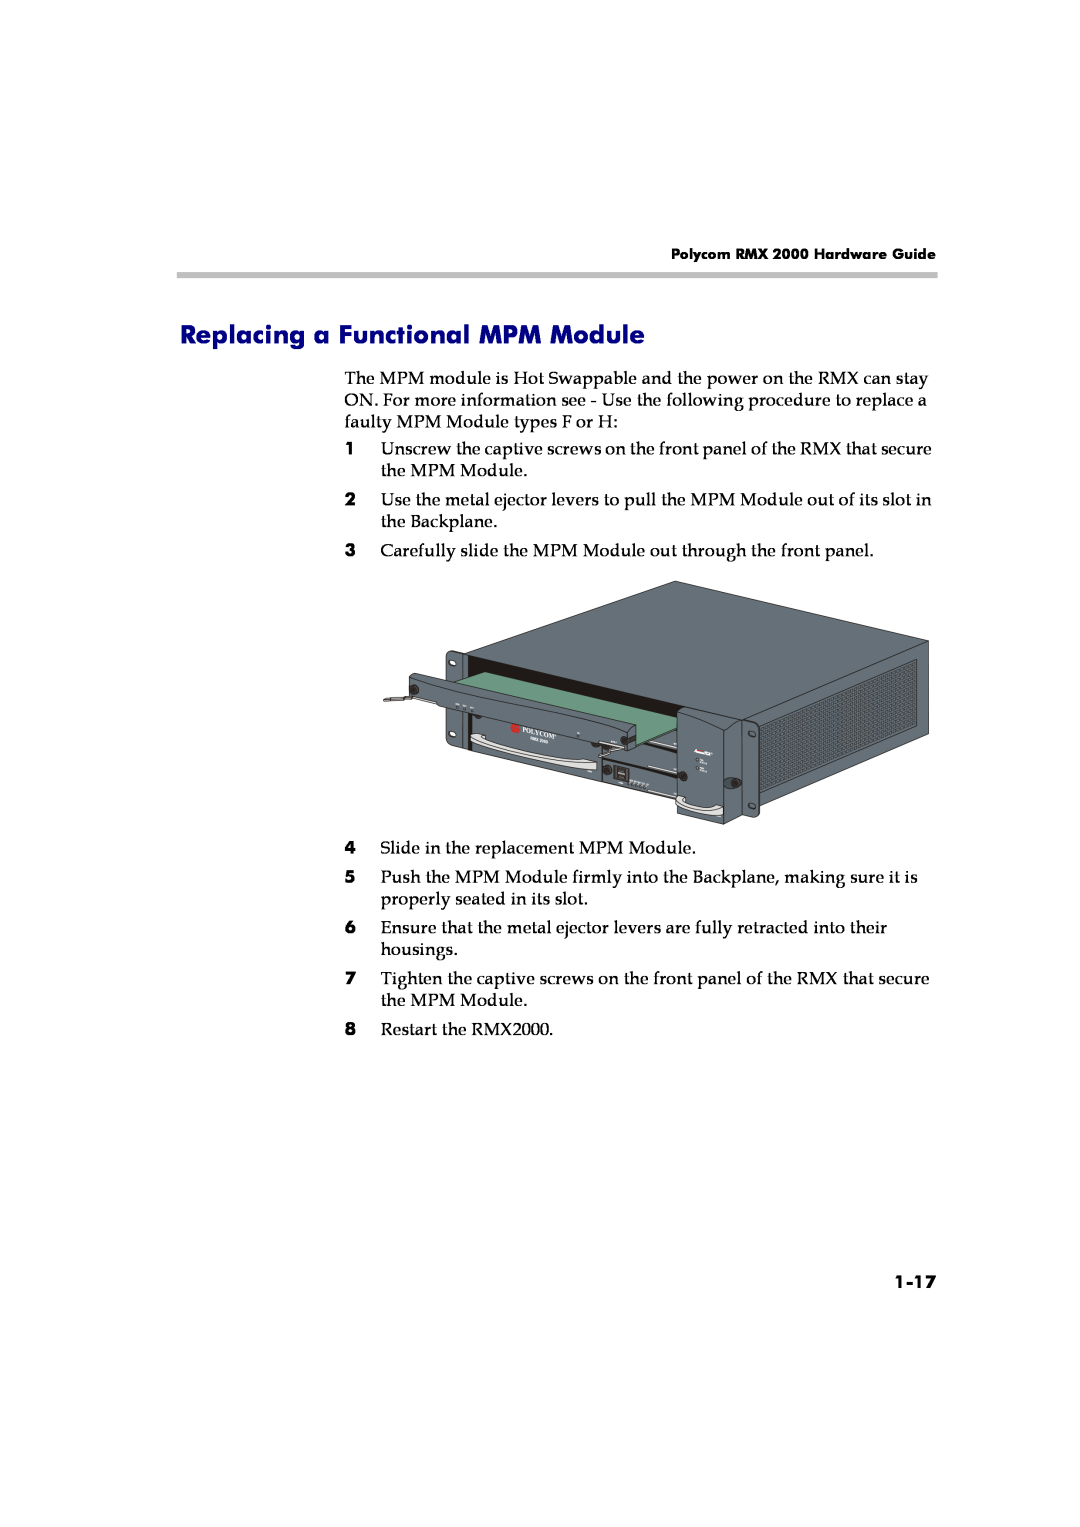 Polycom RMX 2000 manual Replacing a Functional MPM Module, 1-17 